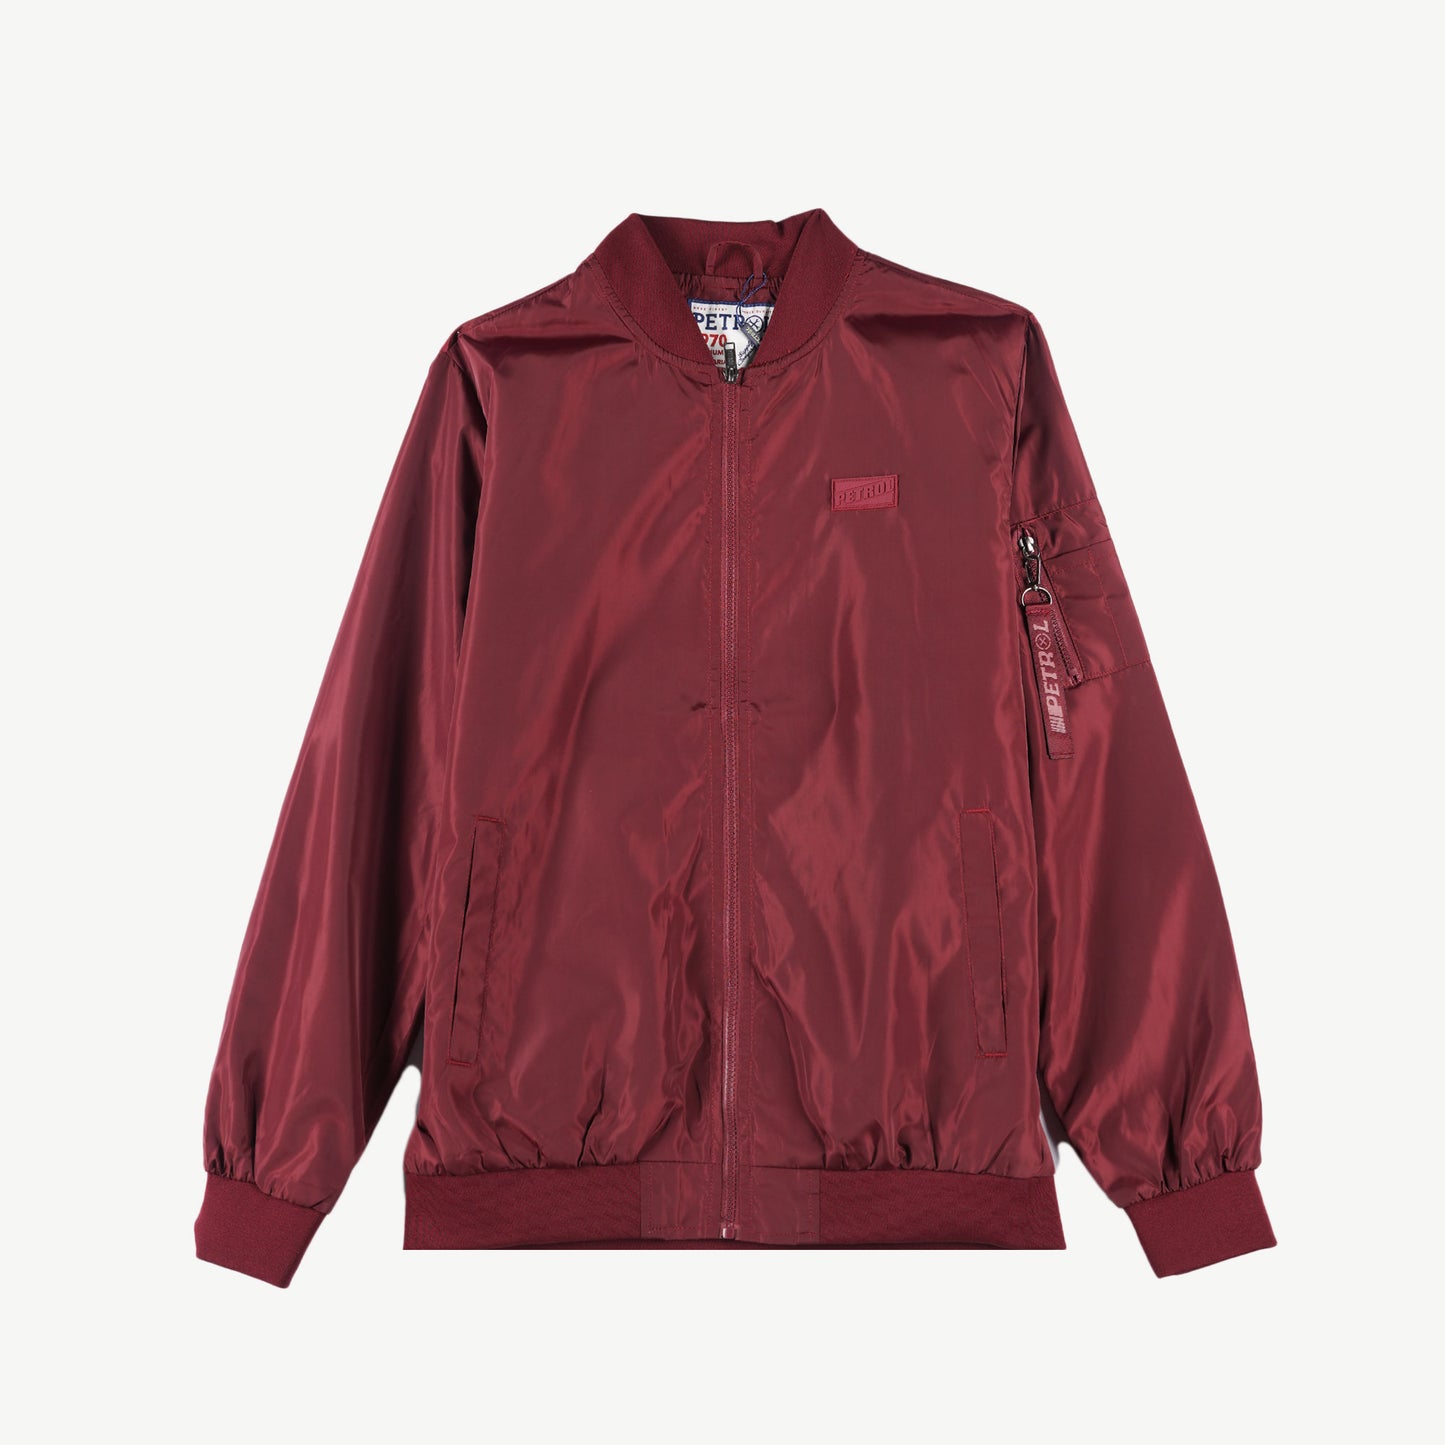 Petrol Basic Jacket for Men Regular Fitting Nylon Fabric Trendy fashion Casual Top Crimson Bomber Jacket for Men 116223 (Crimson)